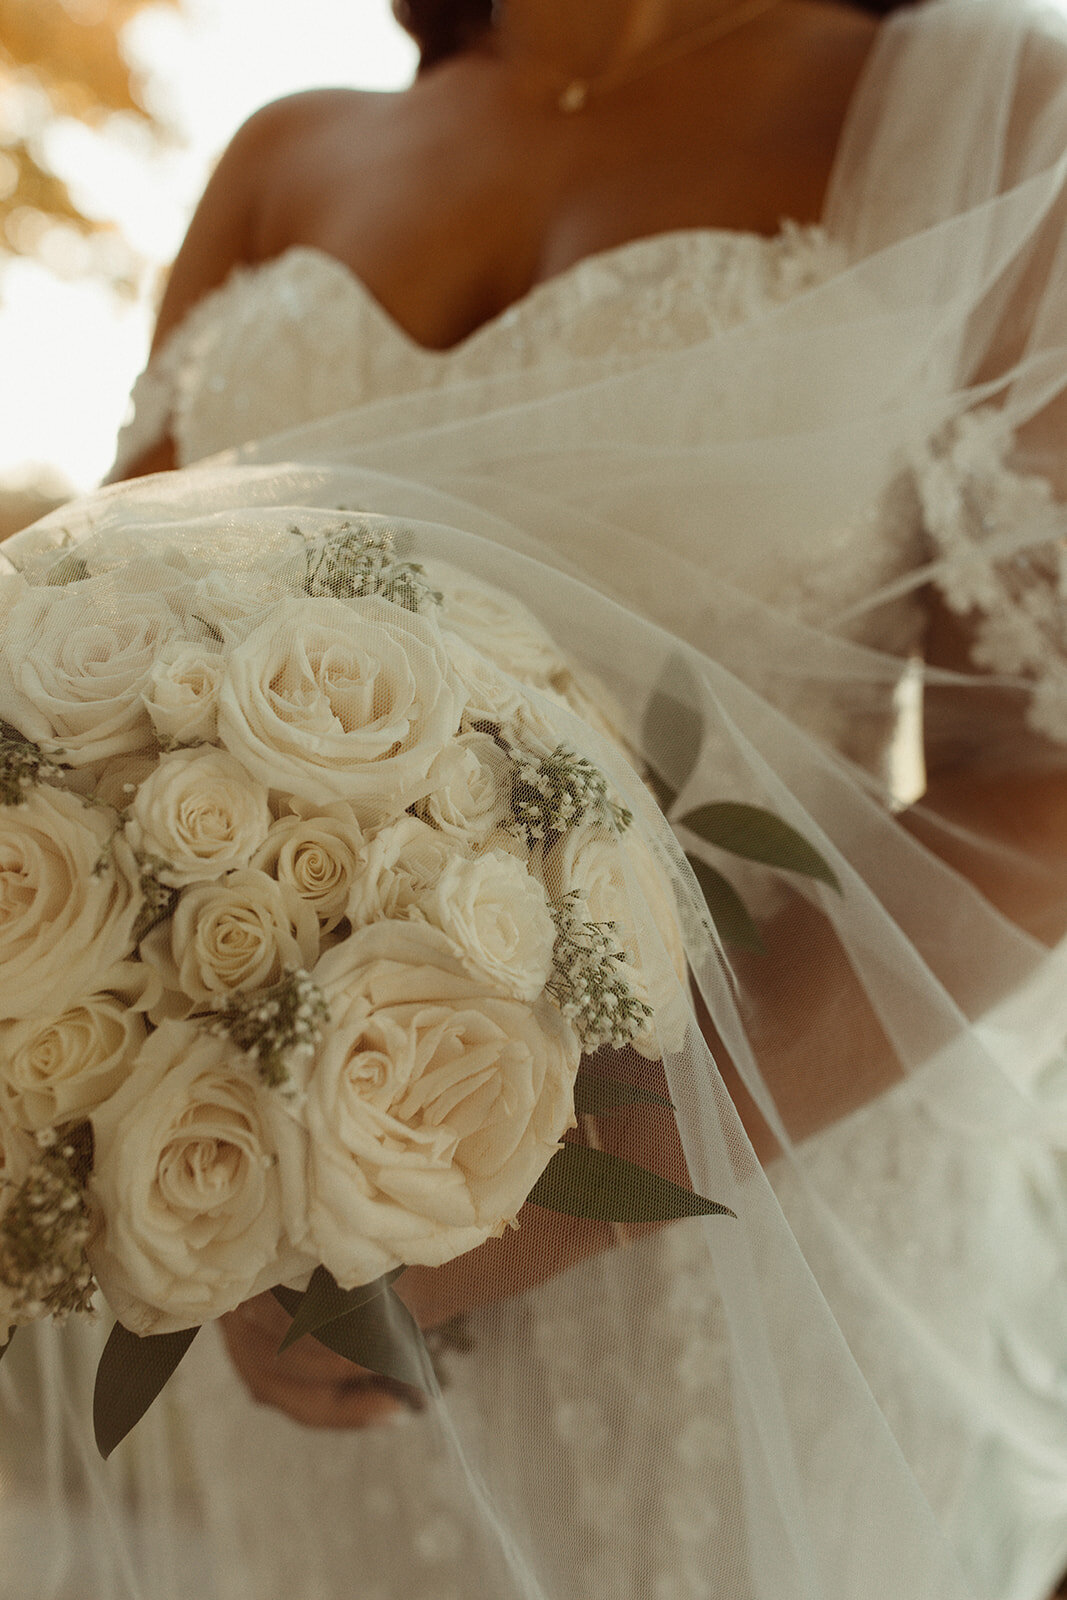 fall-bridal-bouquet